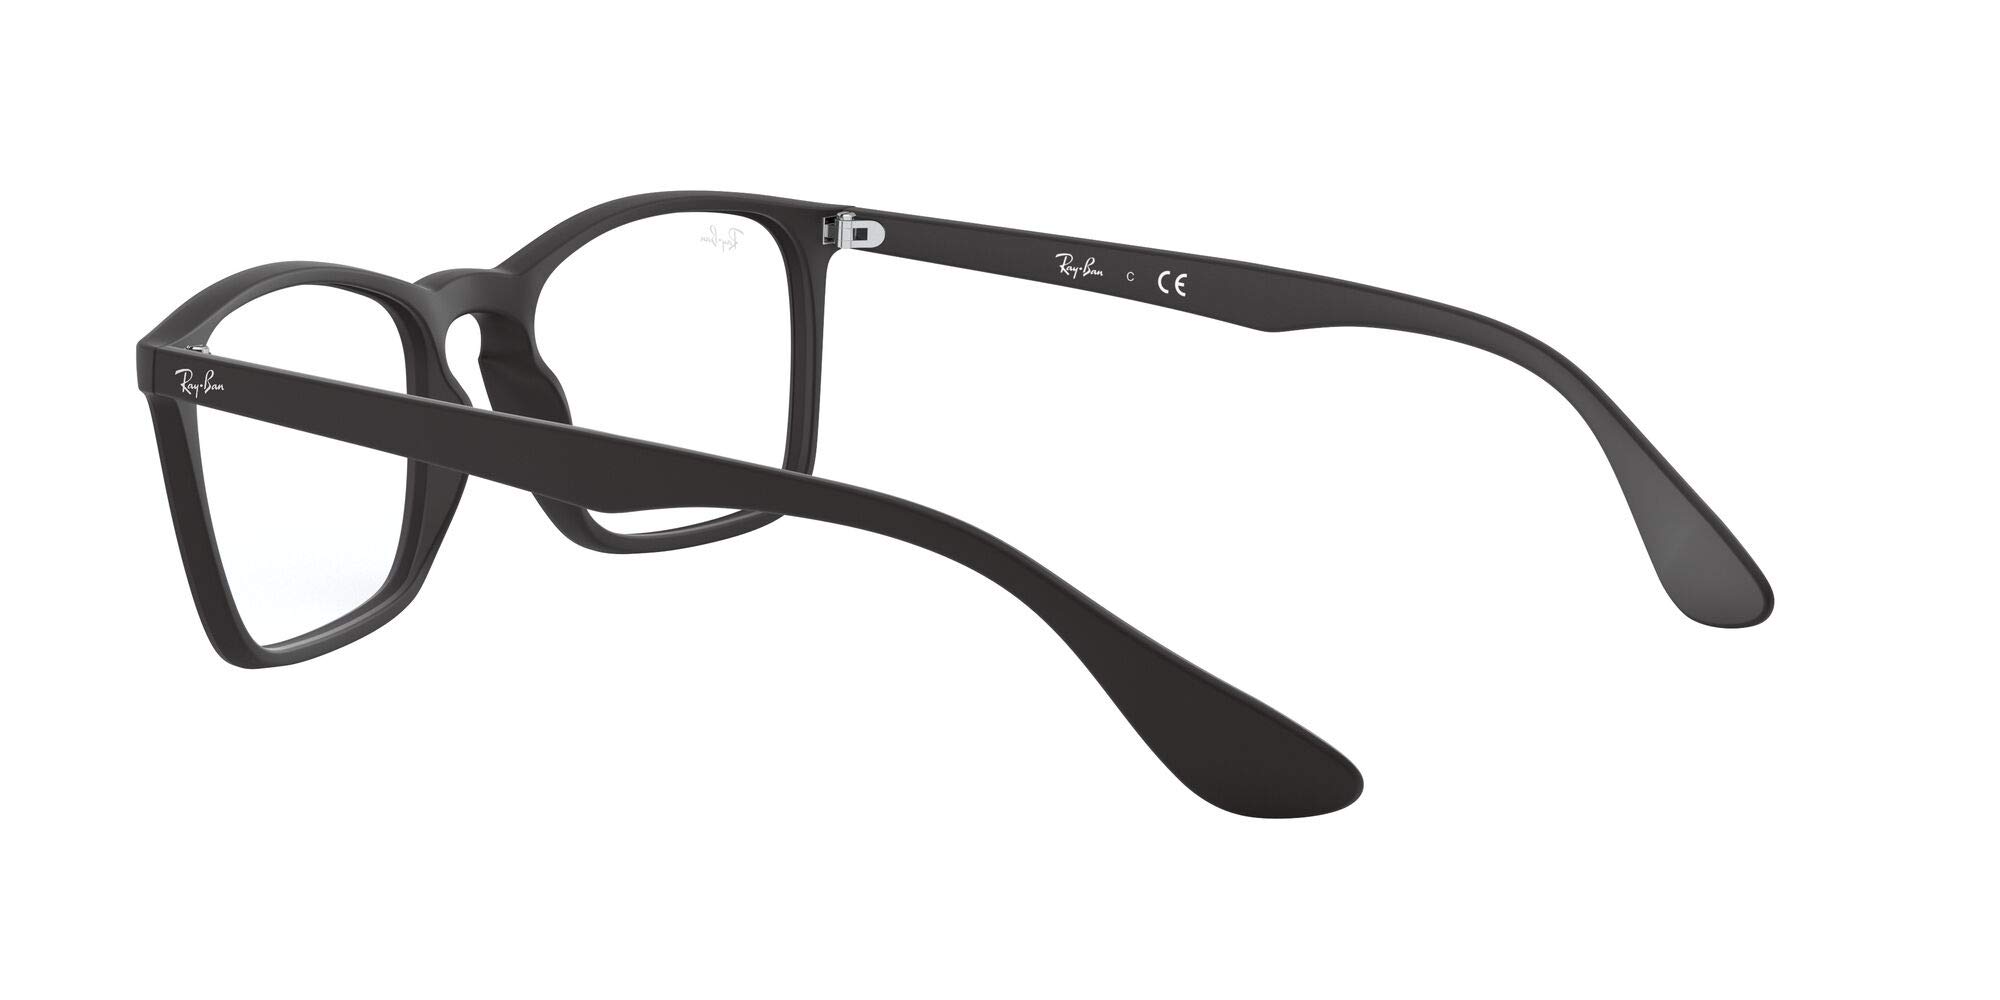 Ray-Ban Men's RX7045 Square Prescription Eyeglass Frames